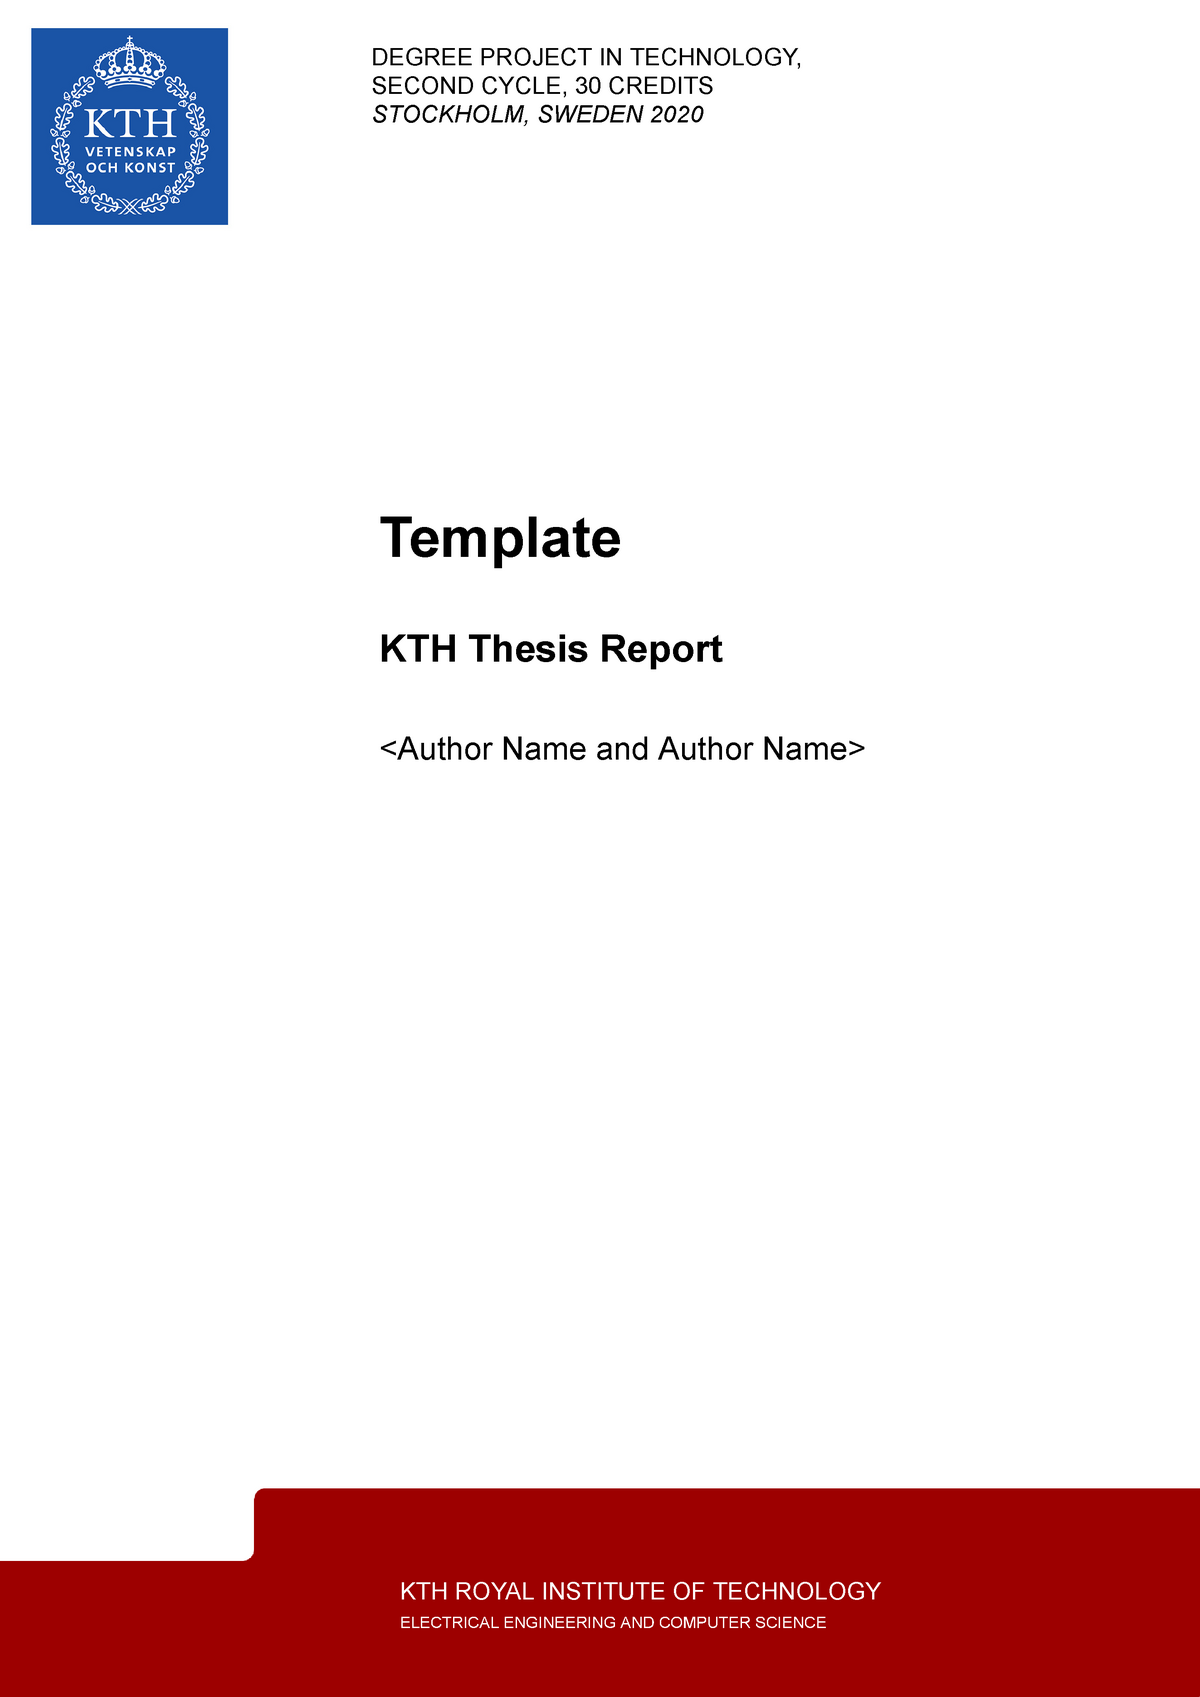 kth master thesis template overleaf